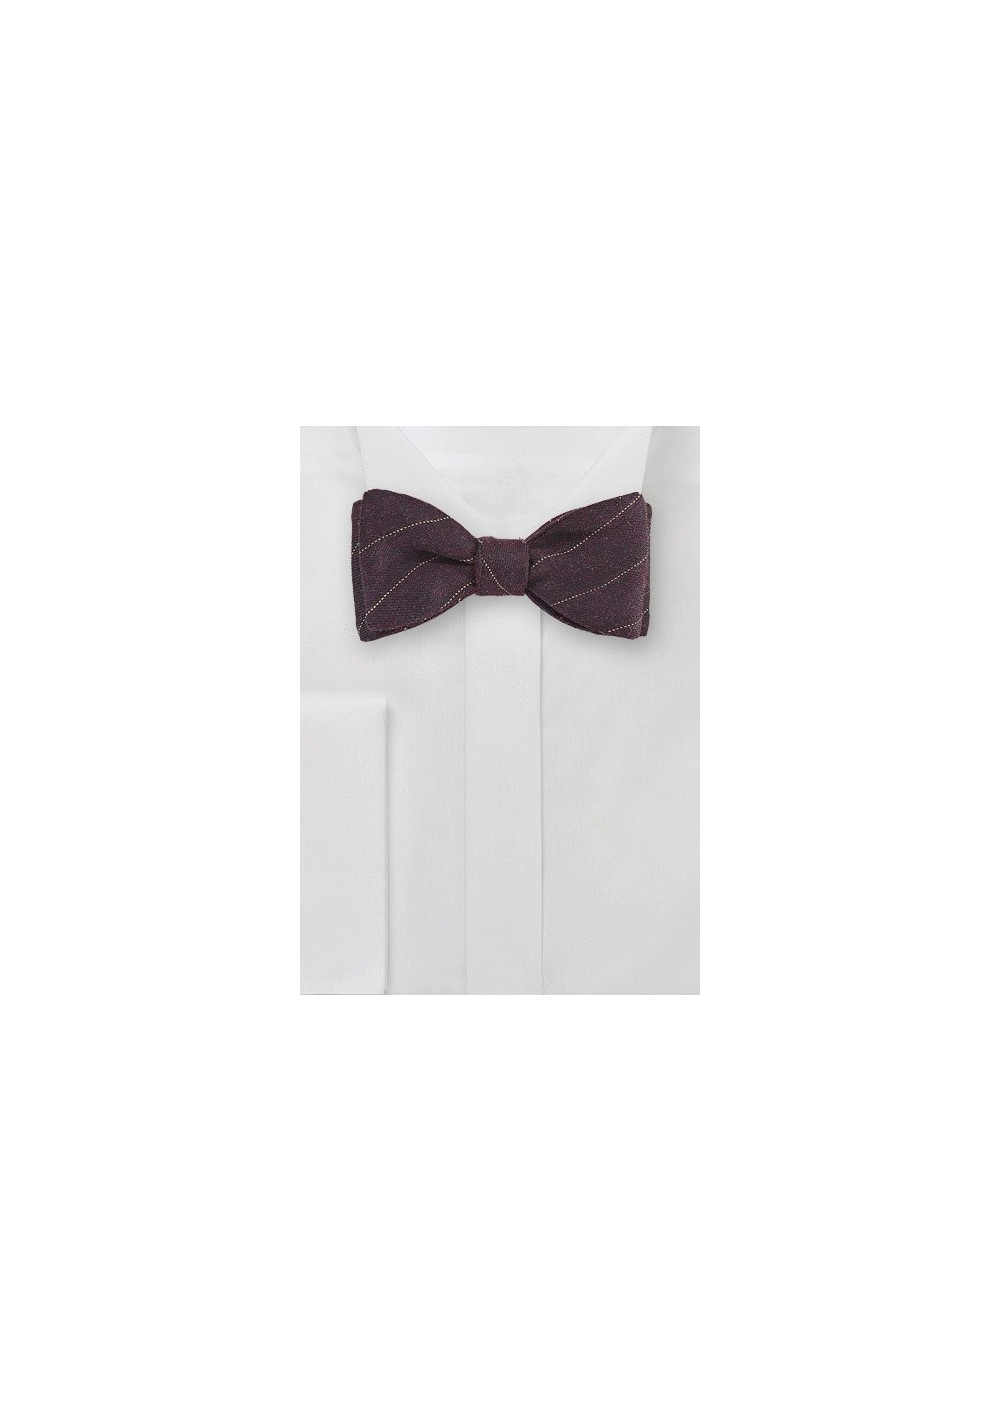 Mahogany Hued Wool Bow Tie with Pencil Stripe